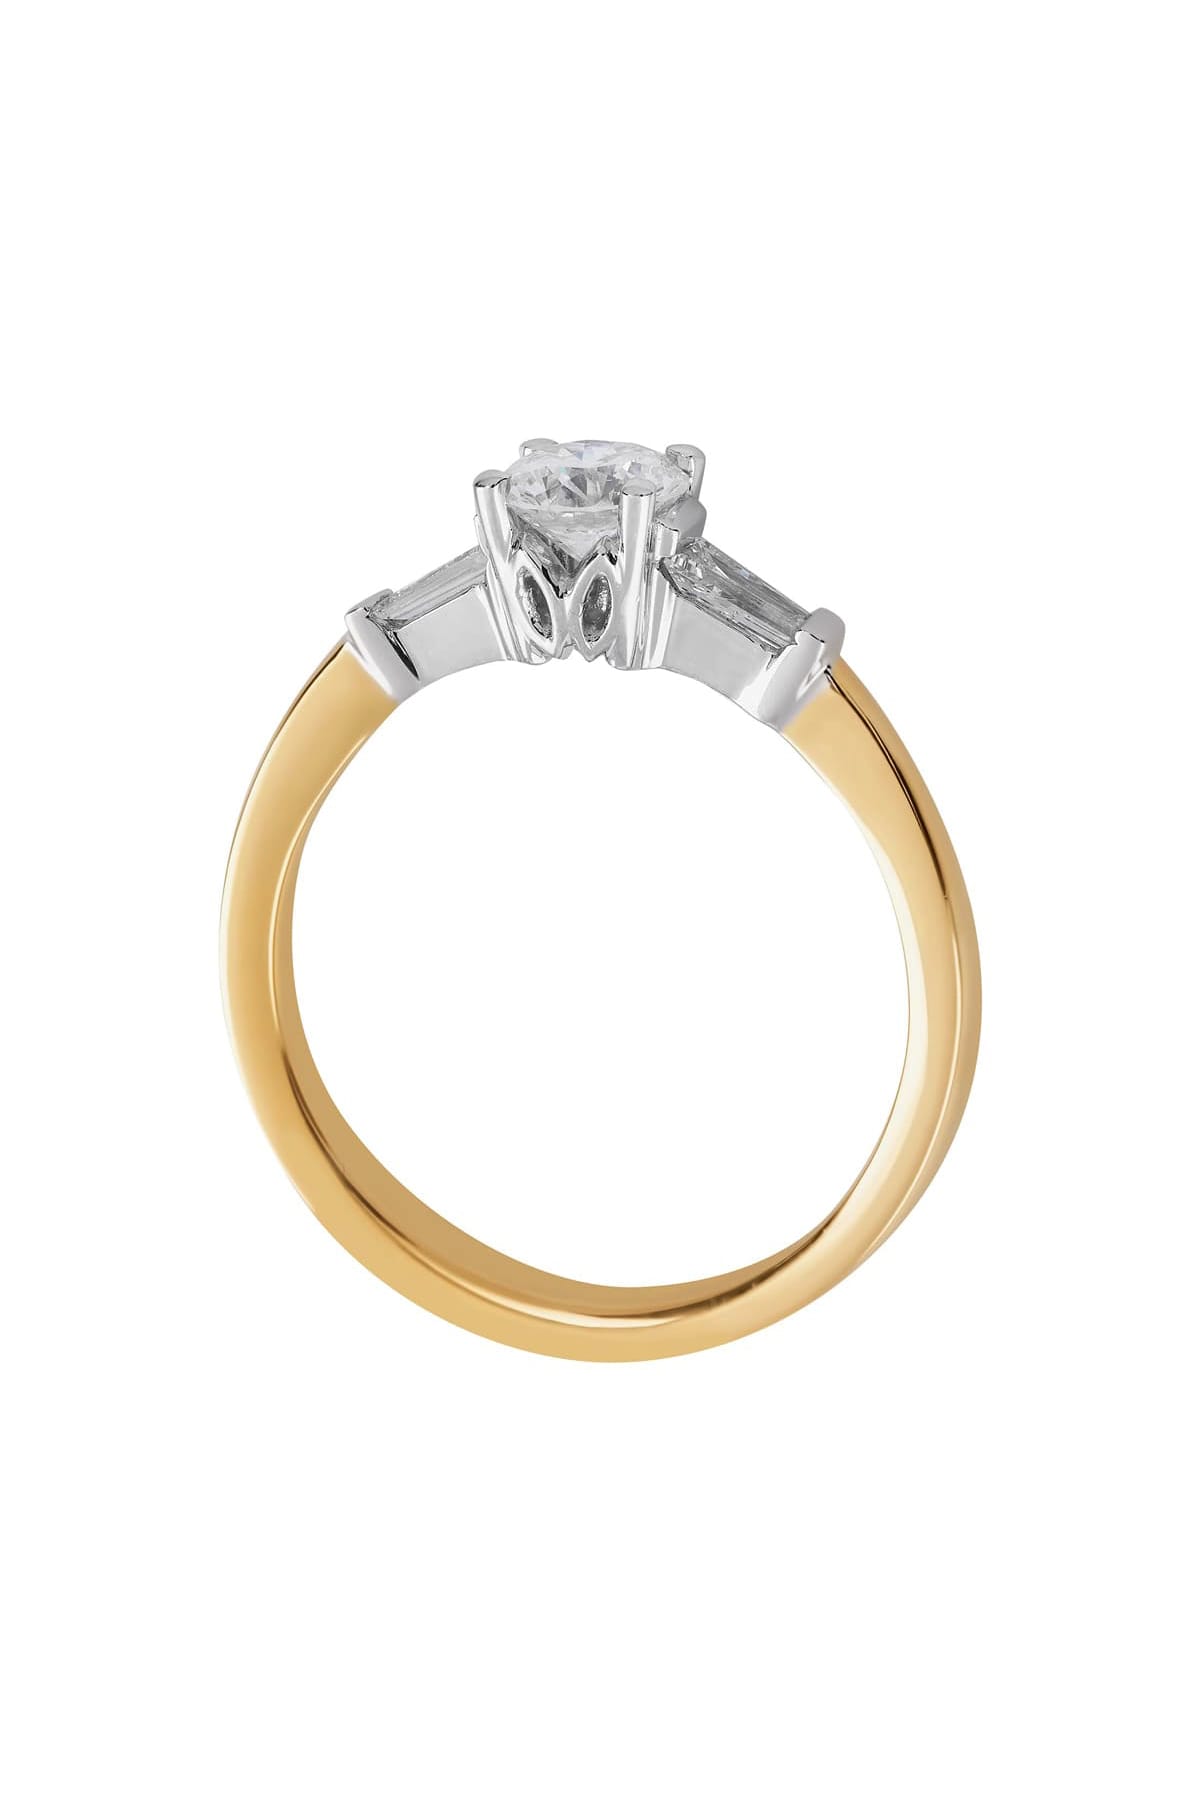 0.53ct Diamond Ring set with Tapper Cut Diamonds available at LeGassick Diamonds and Jewellery Gold Coast, Australia.